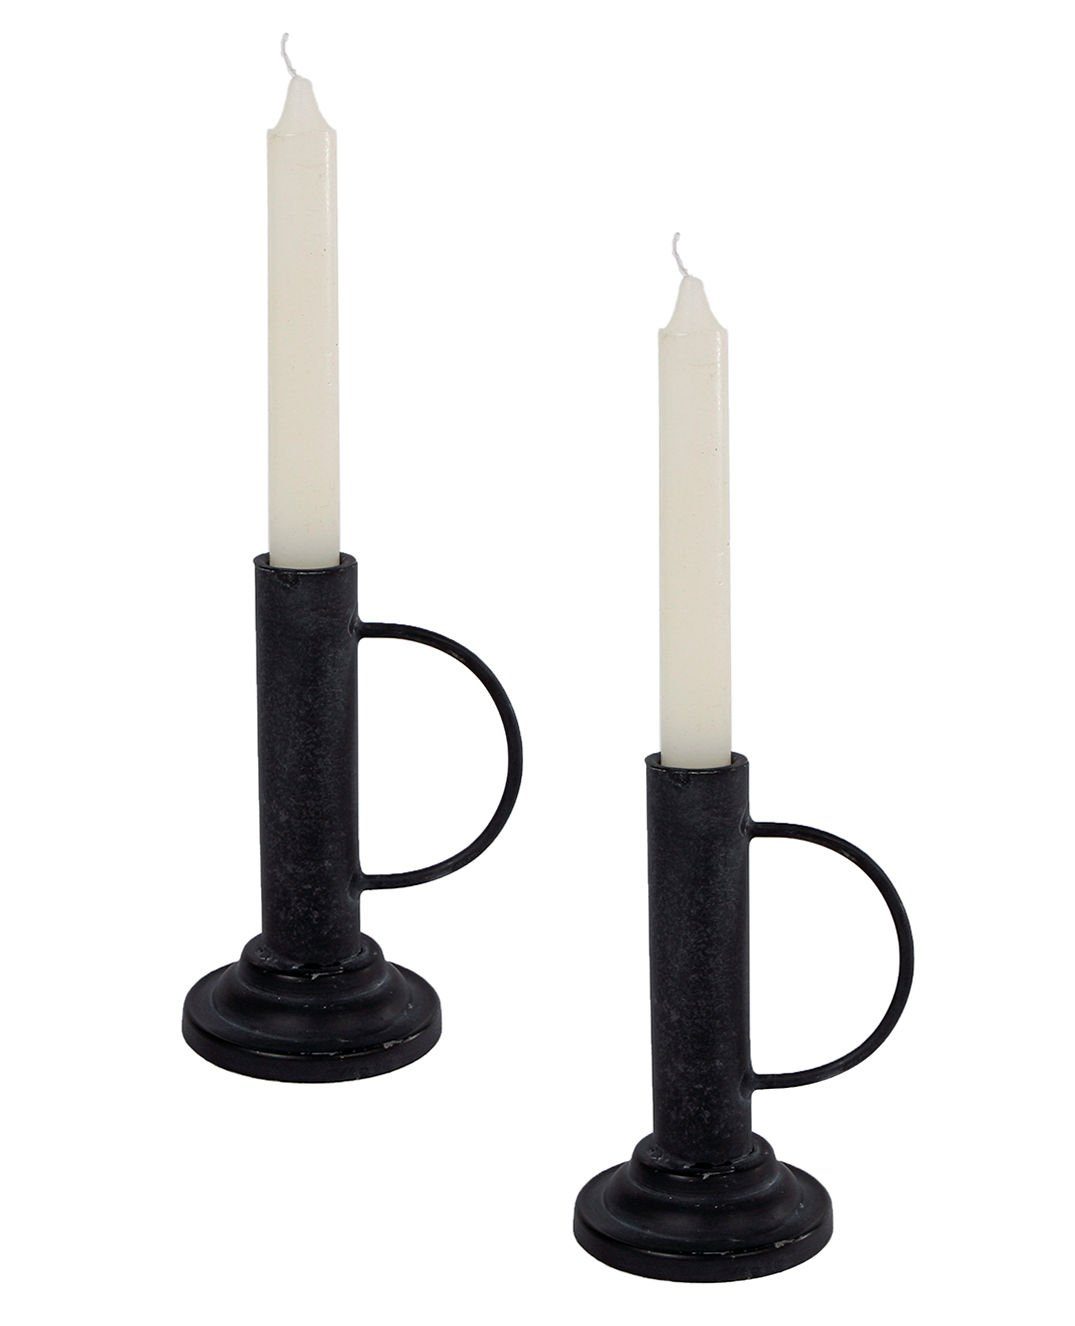 Spetebo Tischkerzenhalter Metall Kerzenhalter schwarz 15 cm - 2er Set  (Packung, 2 St., 2 Kerzenhalter), Fensterbank-Sideboard-Deko, antik,rustikal | Kerzenständer